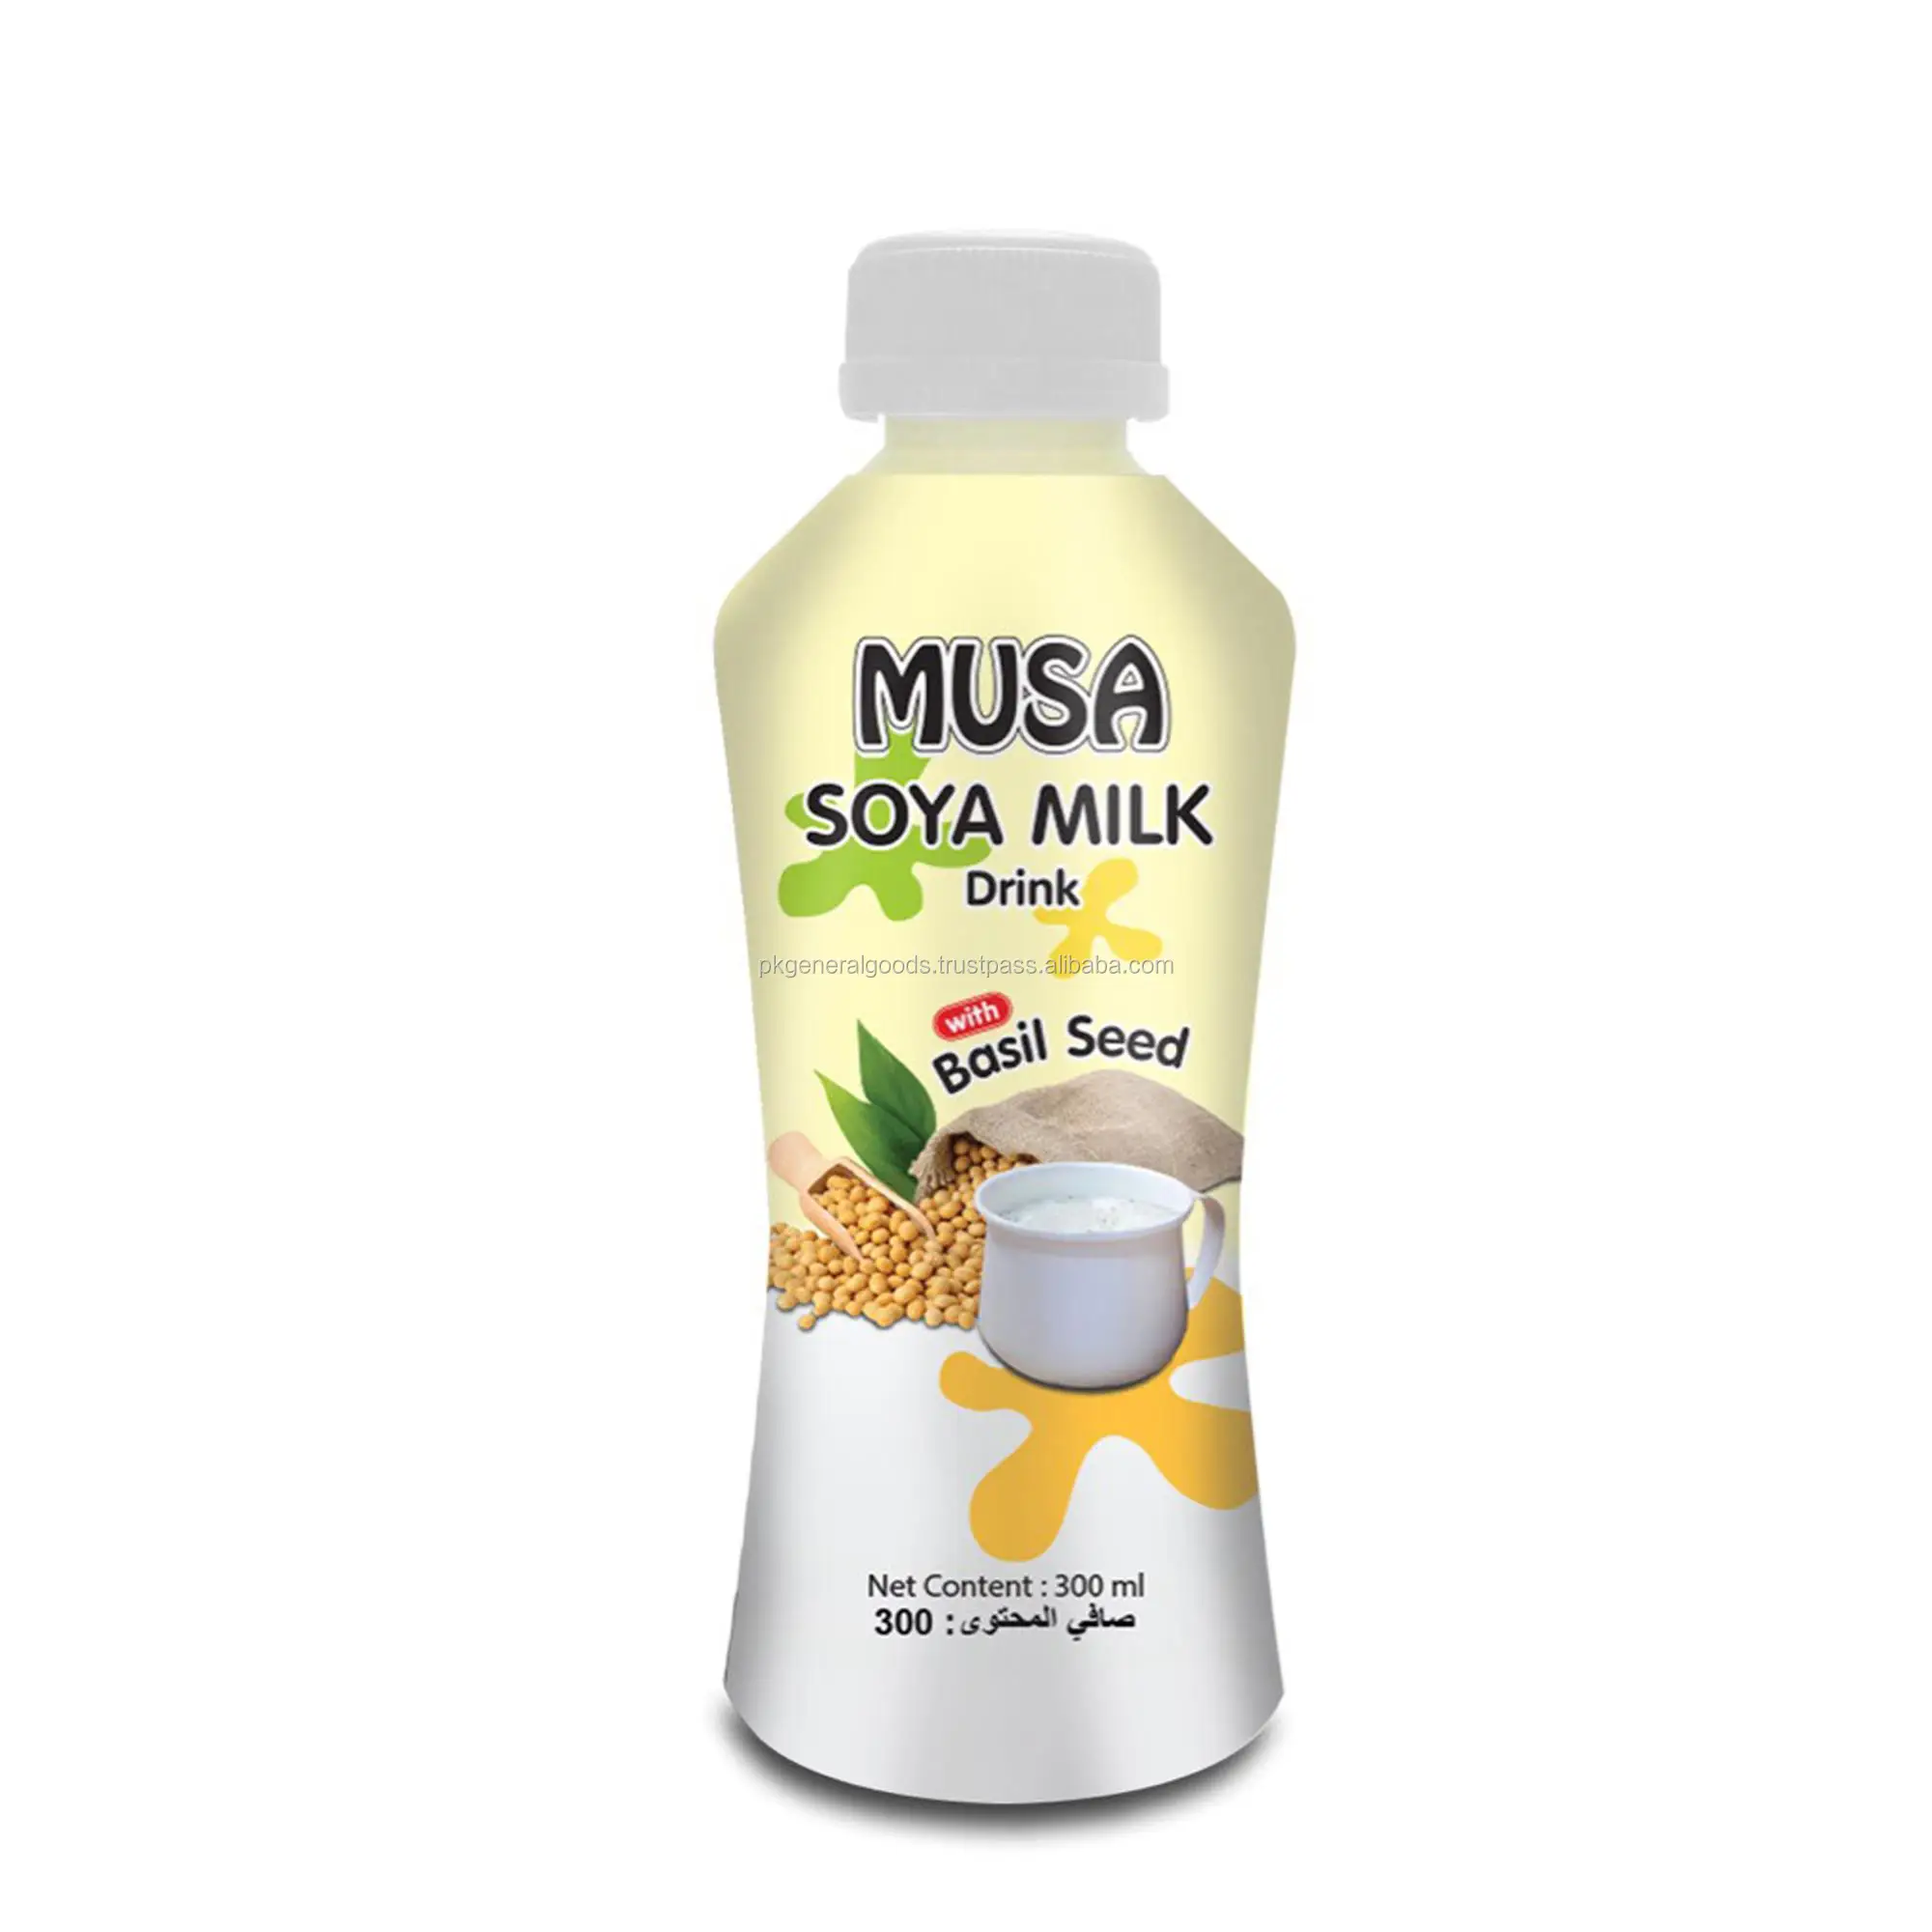 soya milk with basil seed plastic bottle 300ml musa brand